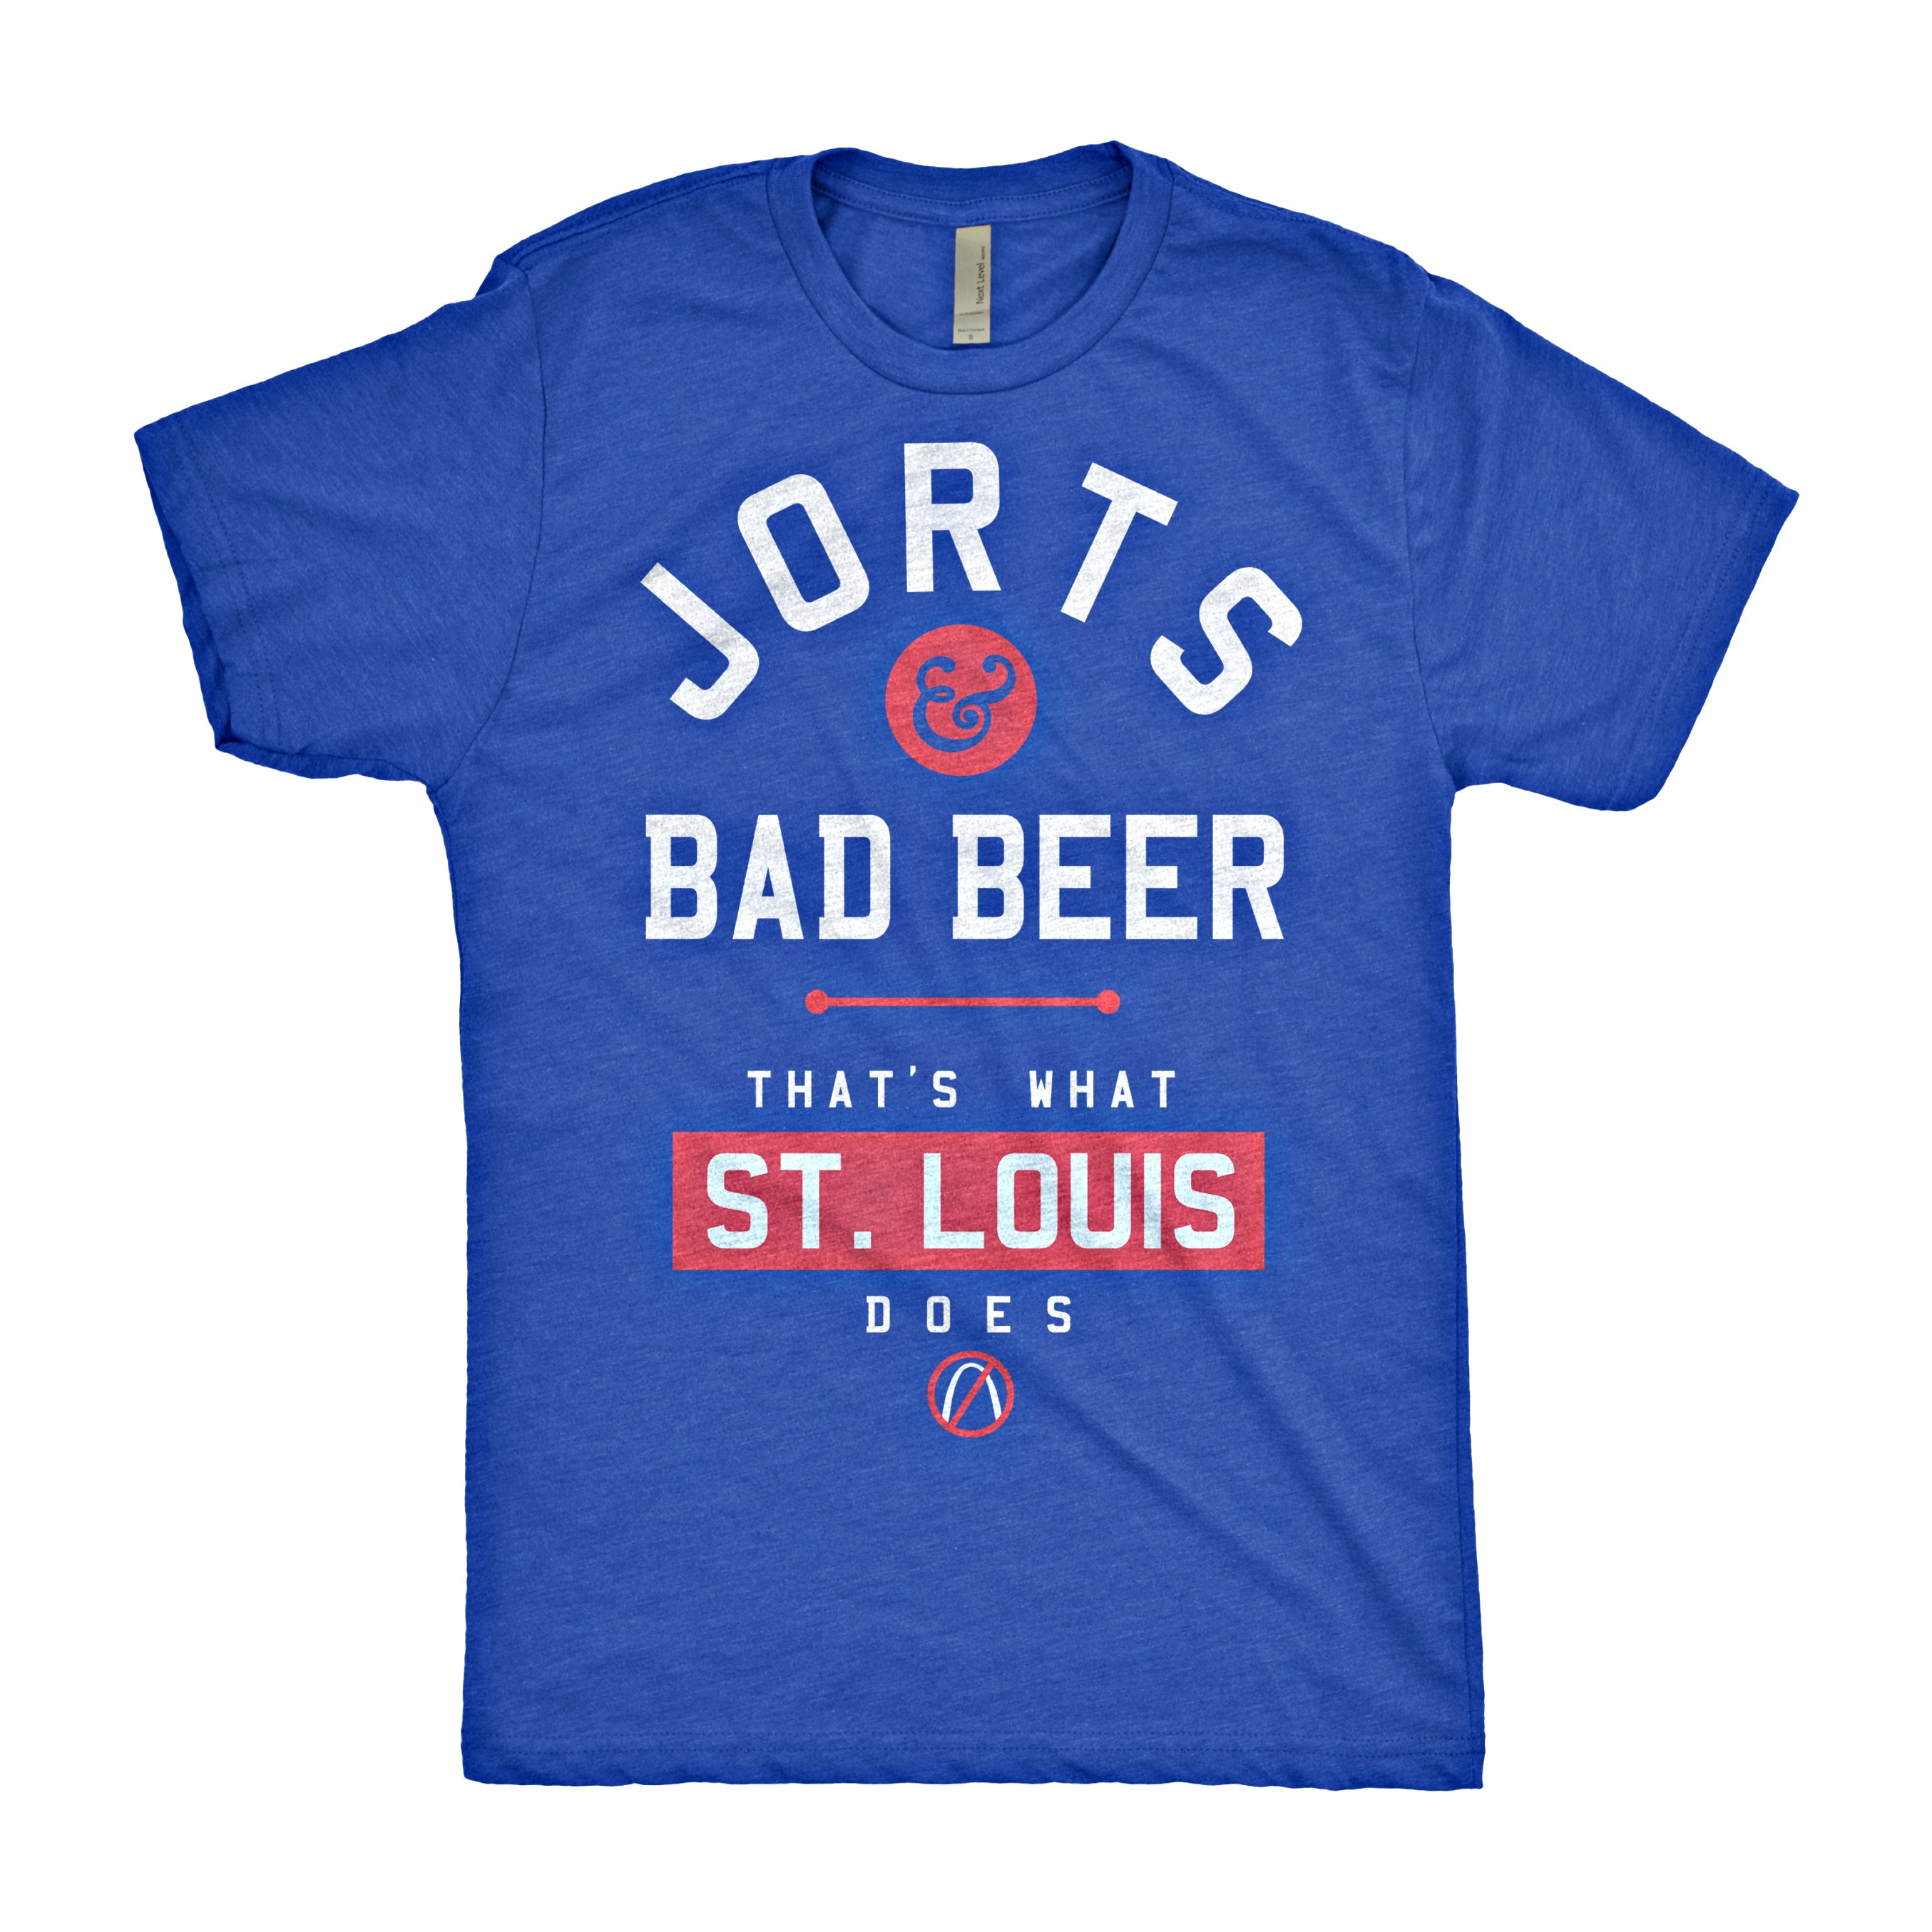 St. Louis Sucks Shirt